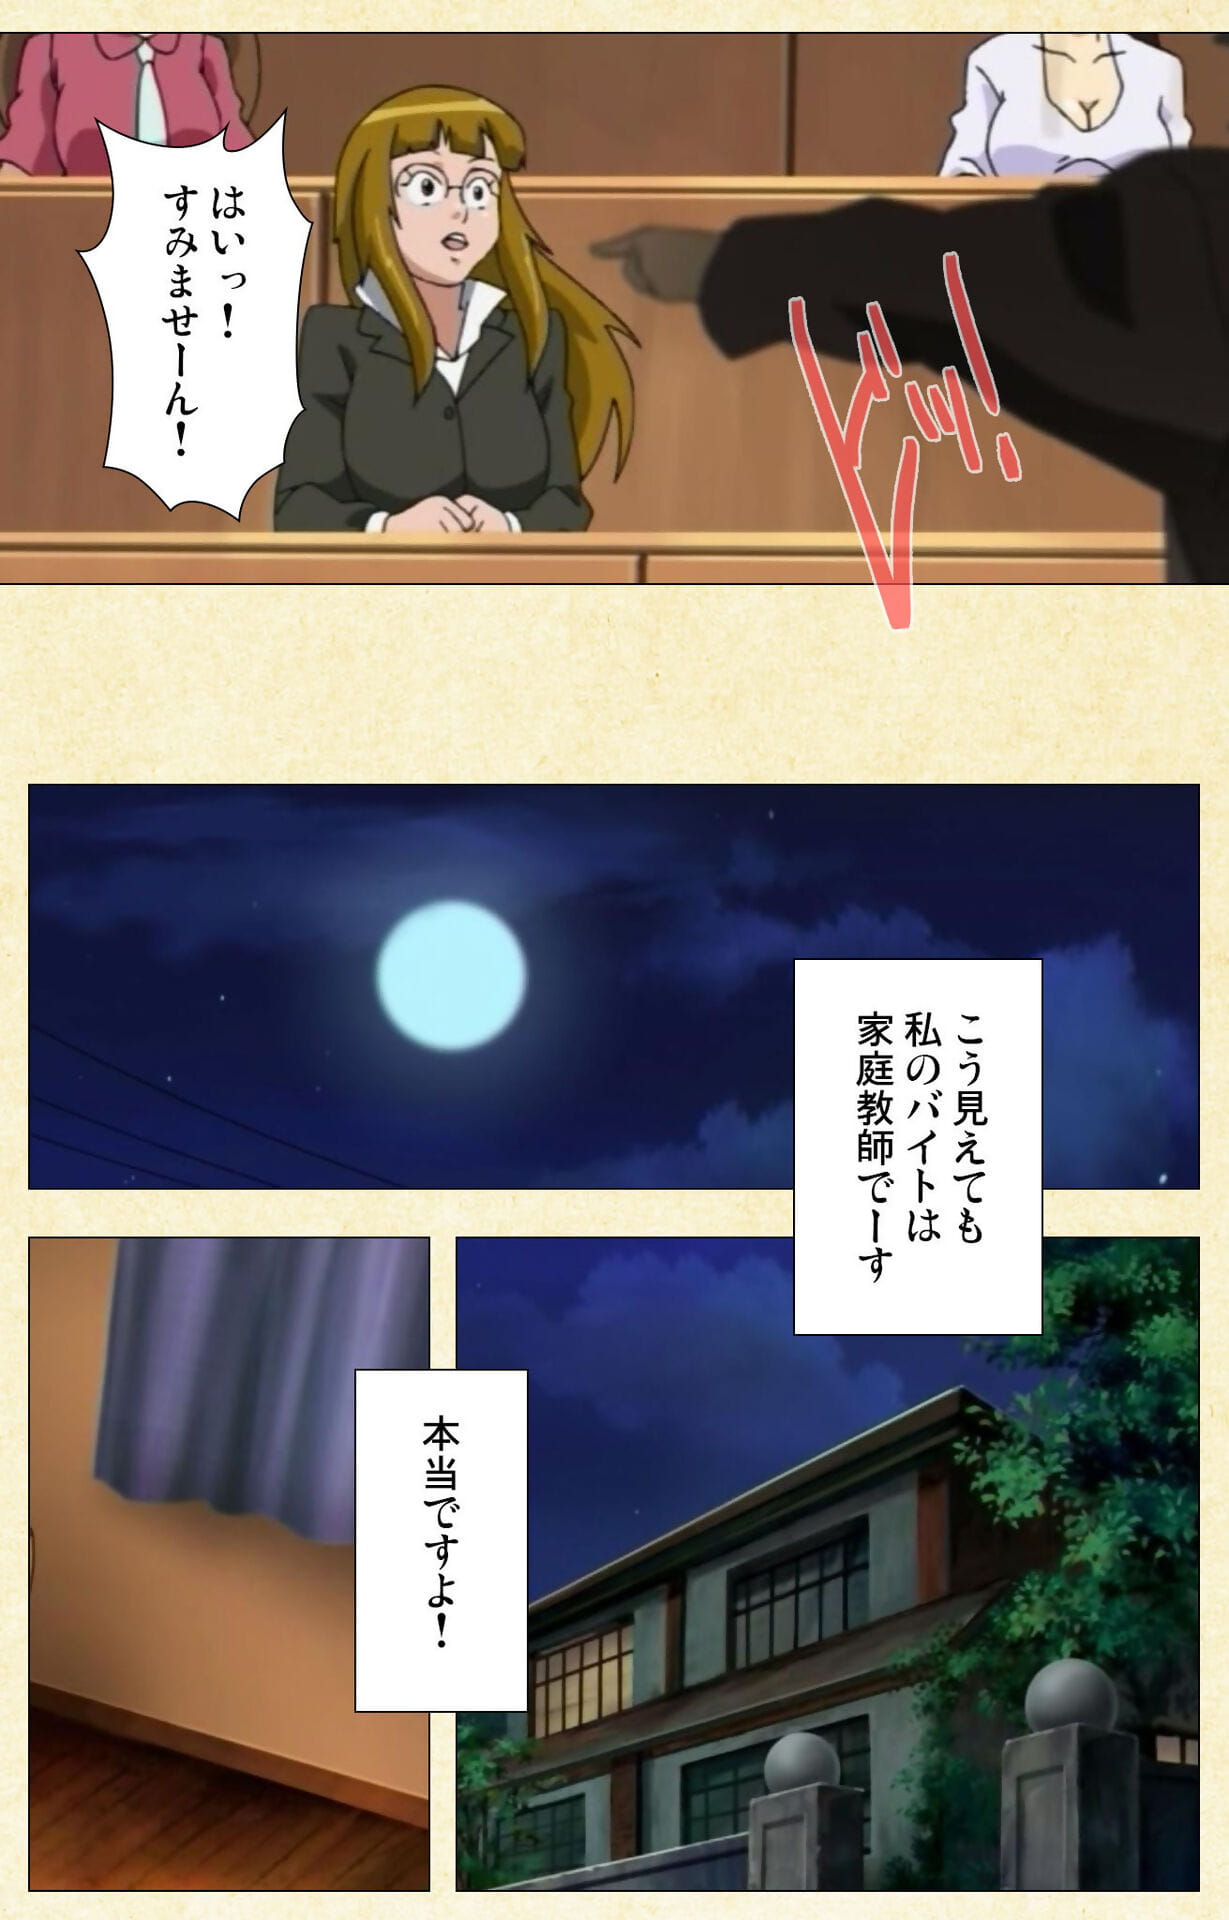 ChiChinoya Full Color seijin ban Akina to onsen de H shi yo~tsu Complete ban - part 6